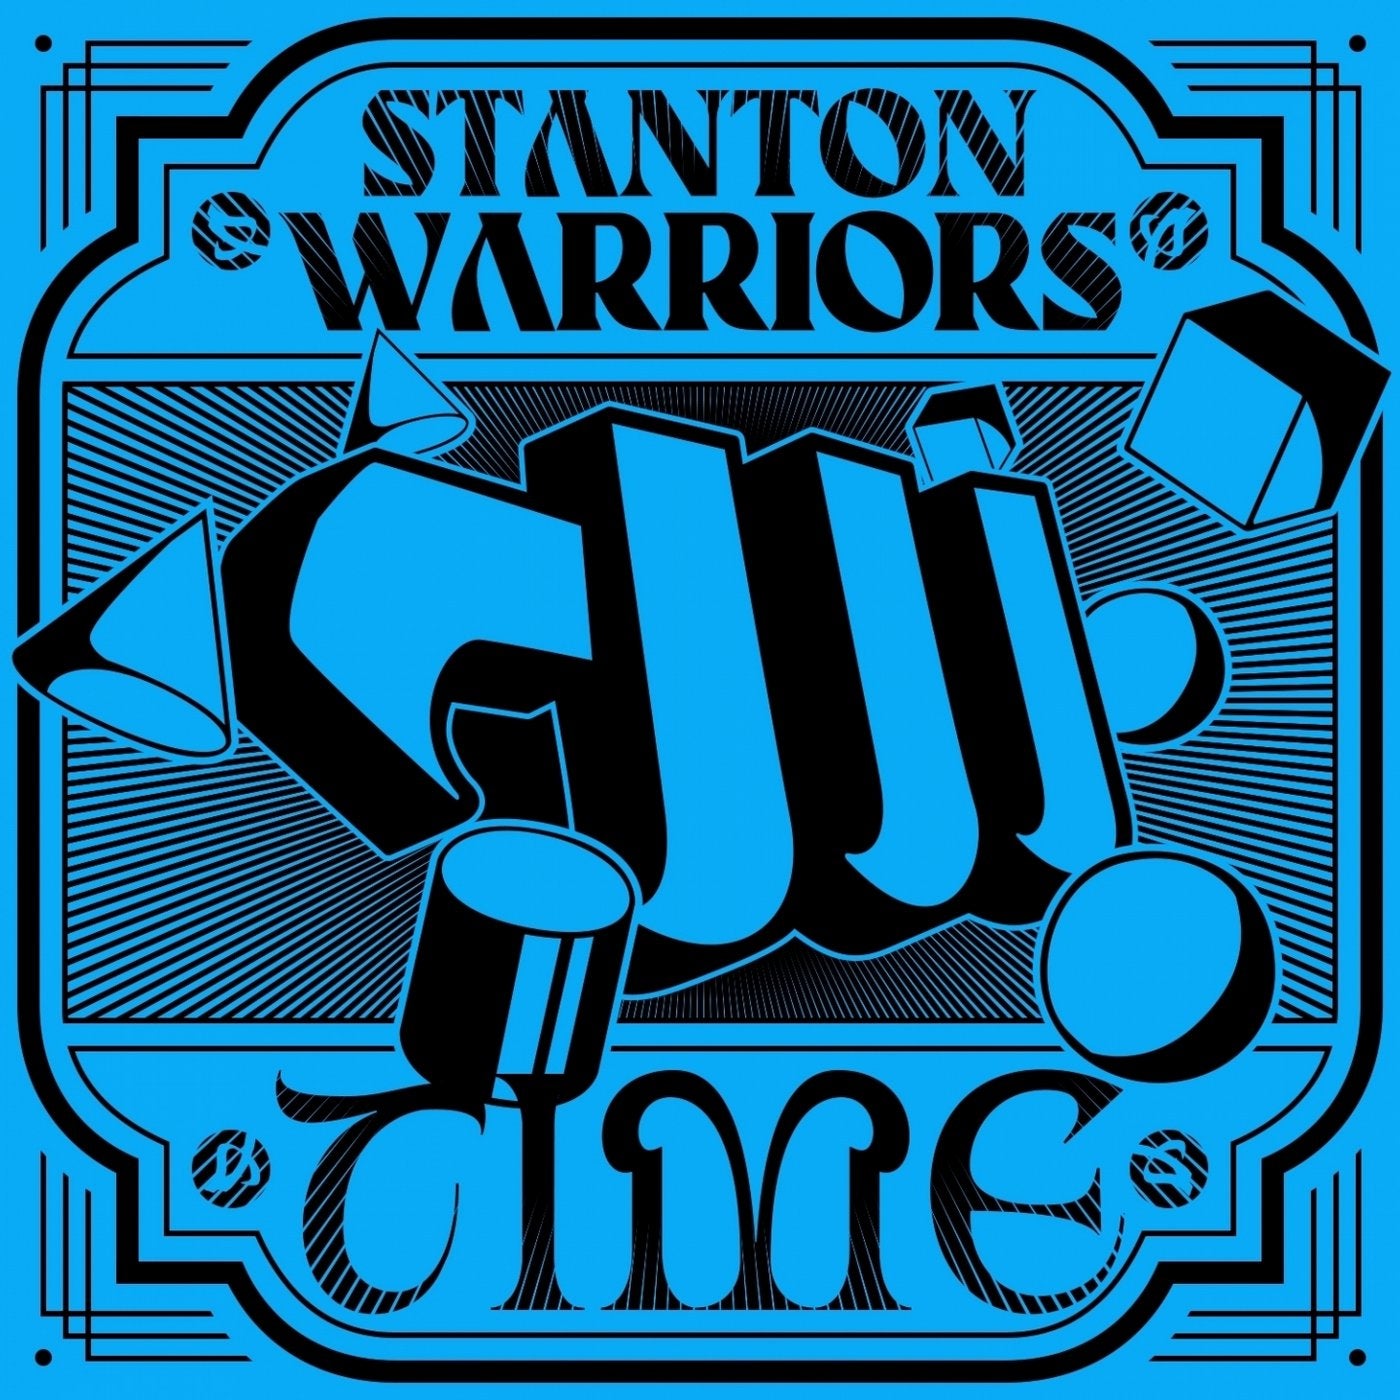 Stanton warriors. Stanton Warrior фото. Stanton Warriors - Precinct. Stanton Warriors, альбомы.